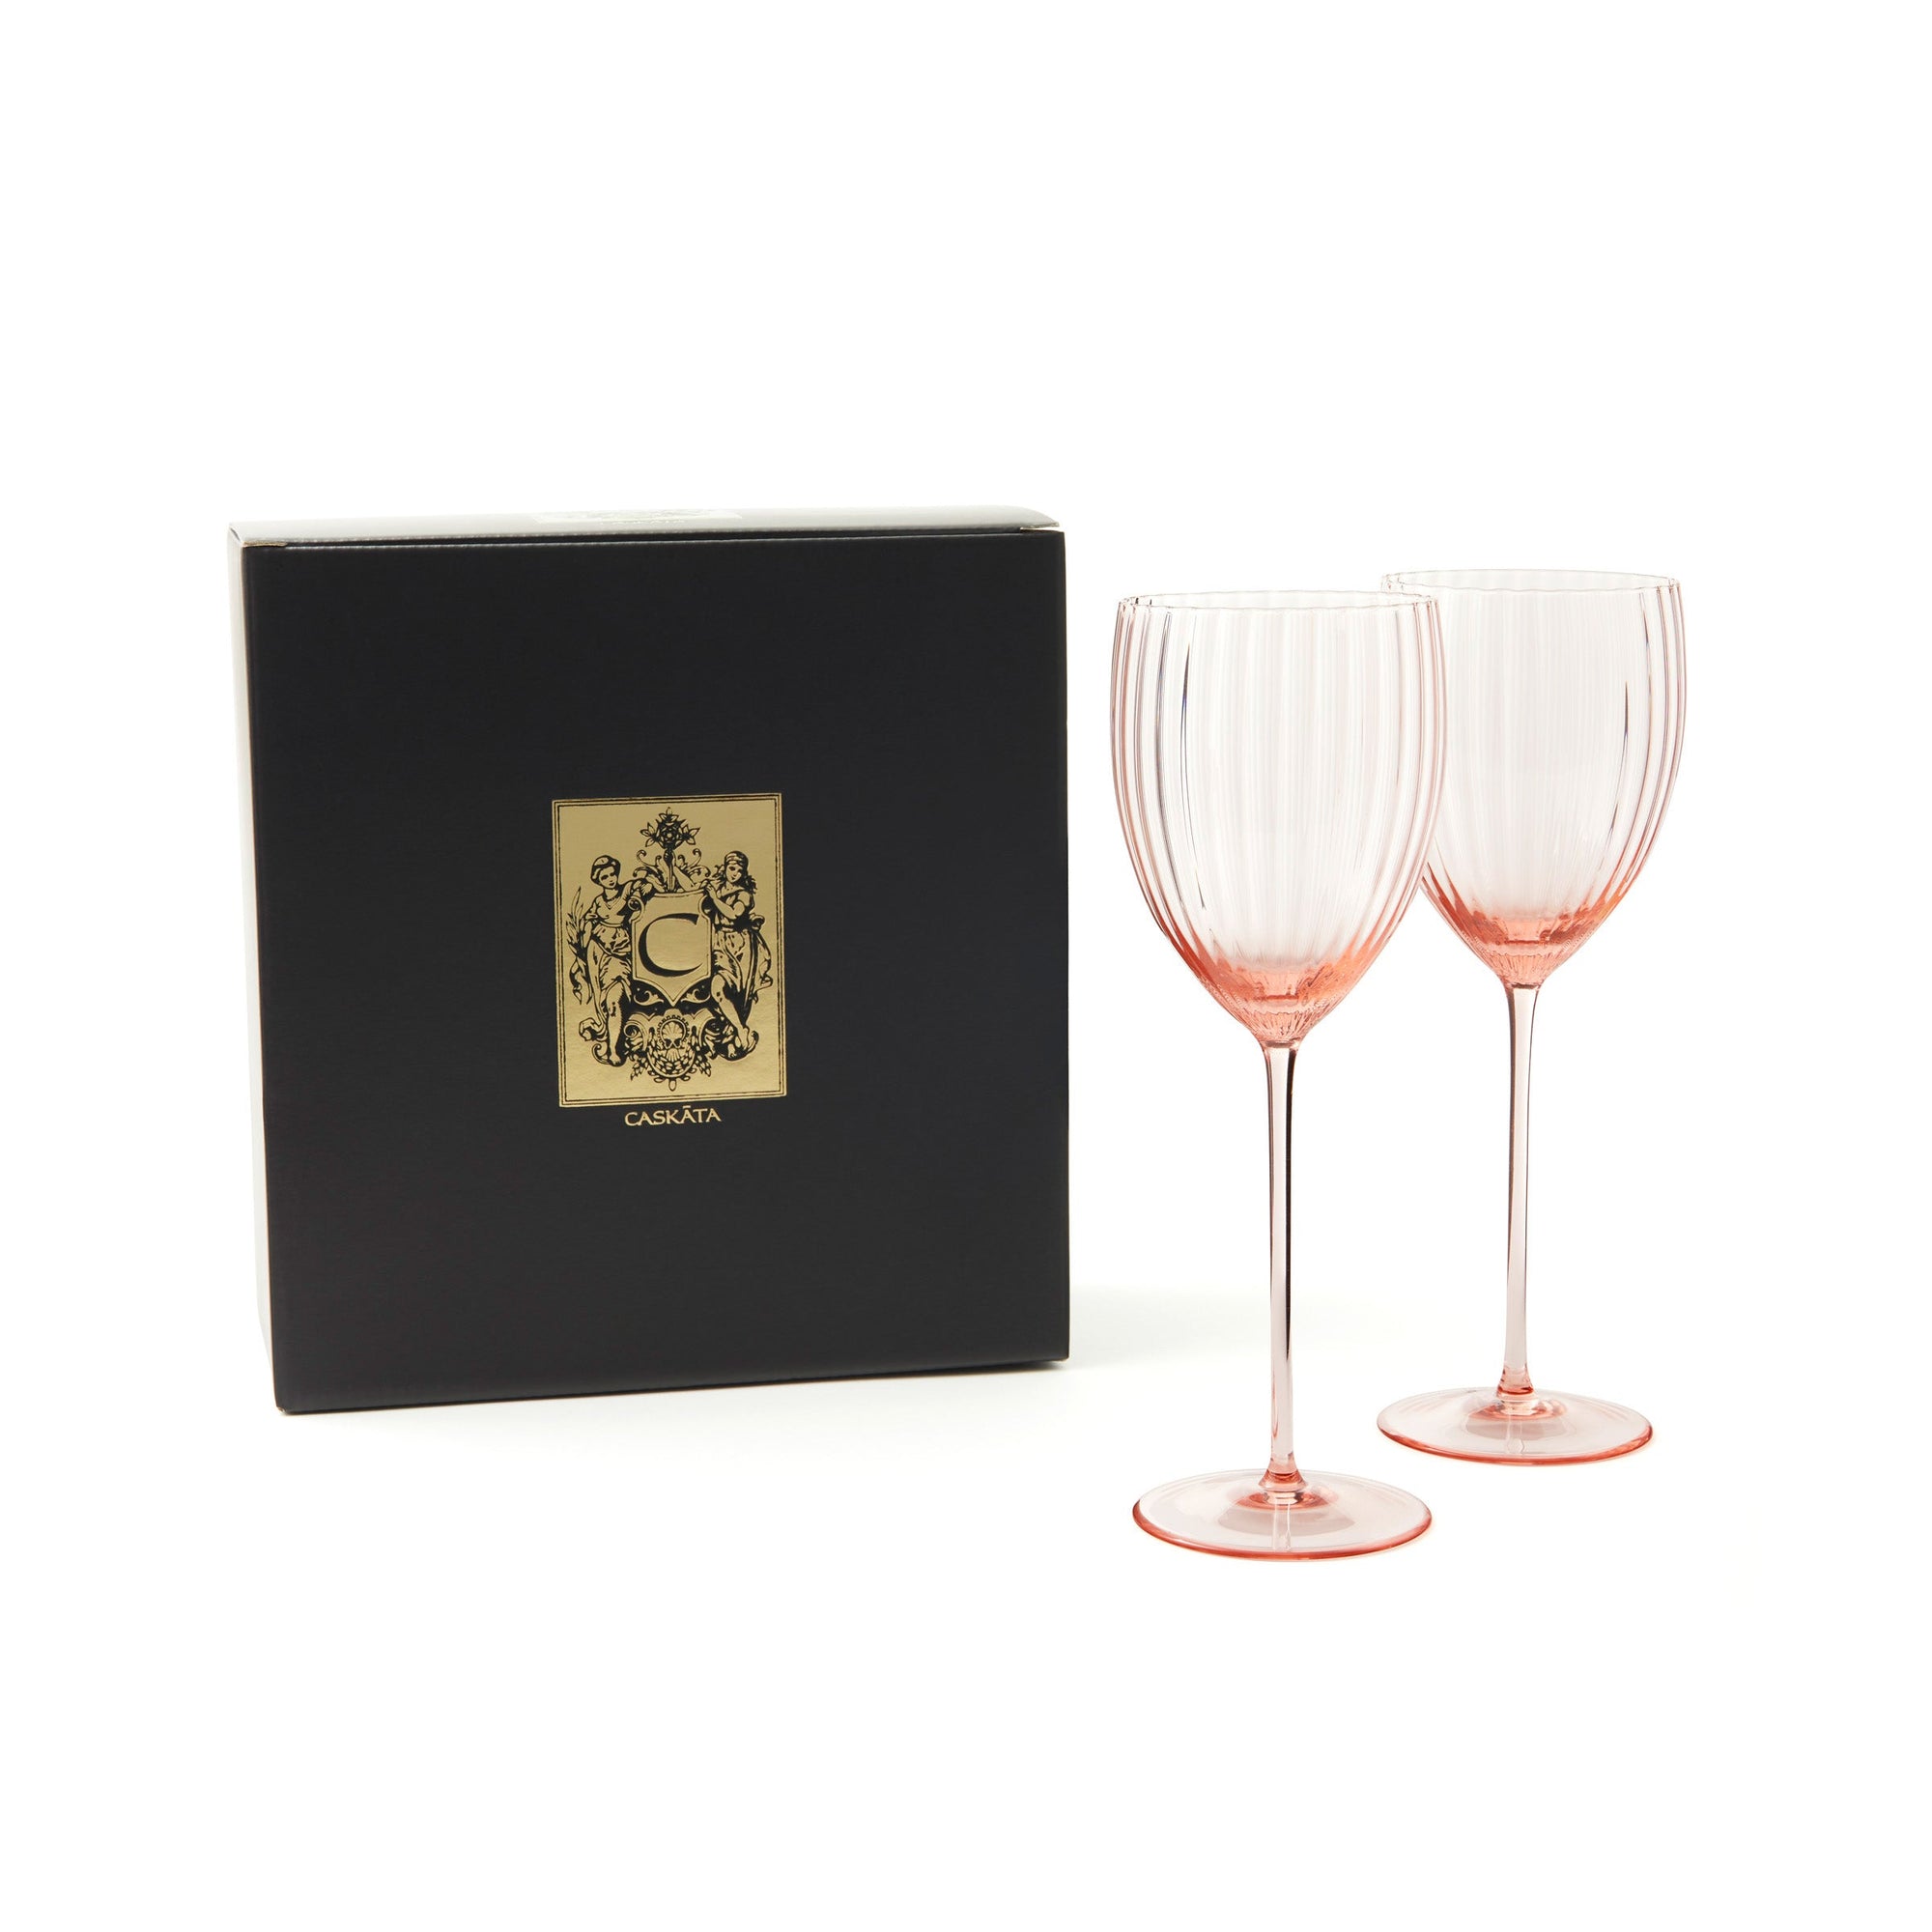 Quinn rose pink crystal universal wine glasses from Caskata.